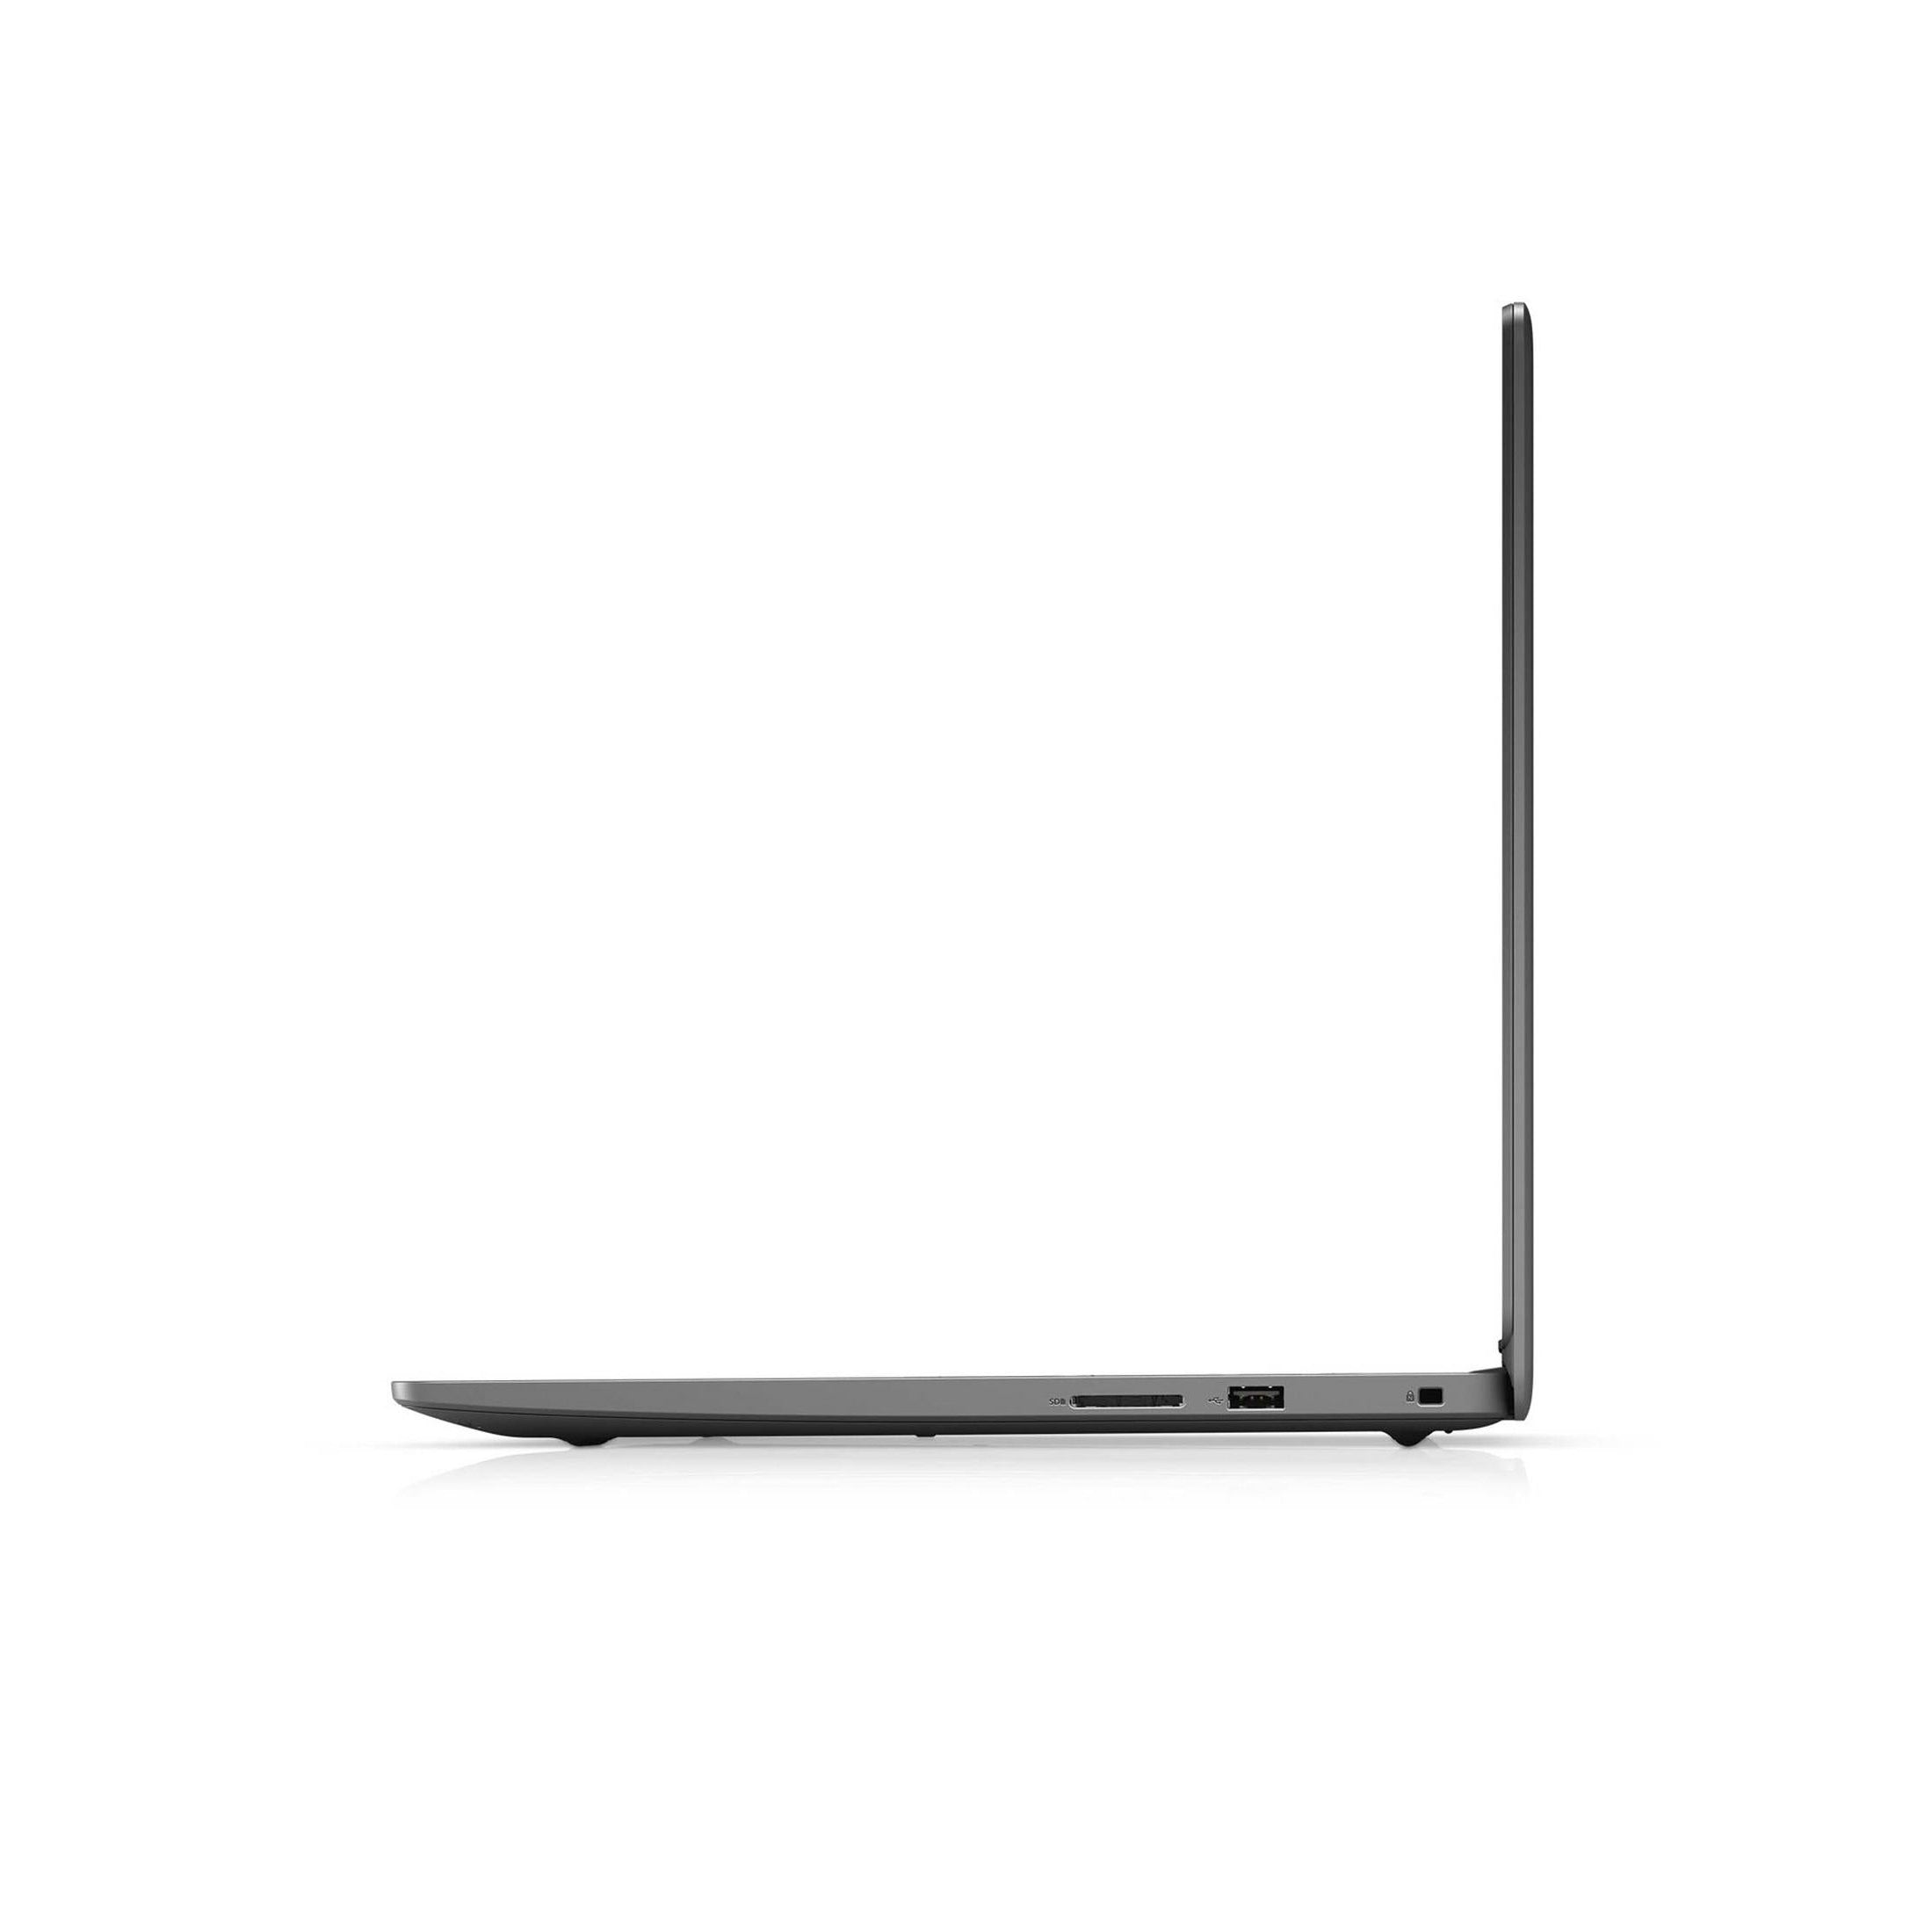 Dell Inspiron 15 3501 15.6" Laptop - Intel Core i5-1135G7, 8GB RAM, 256GB SSD, Black